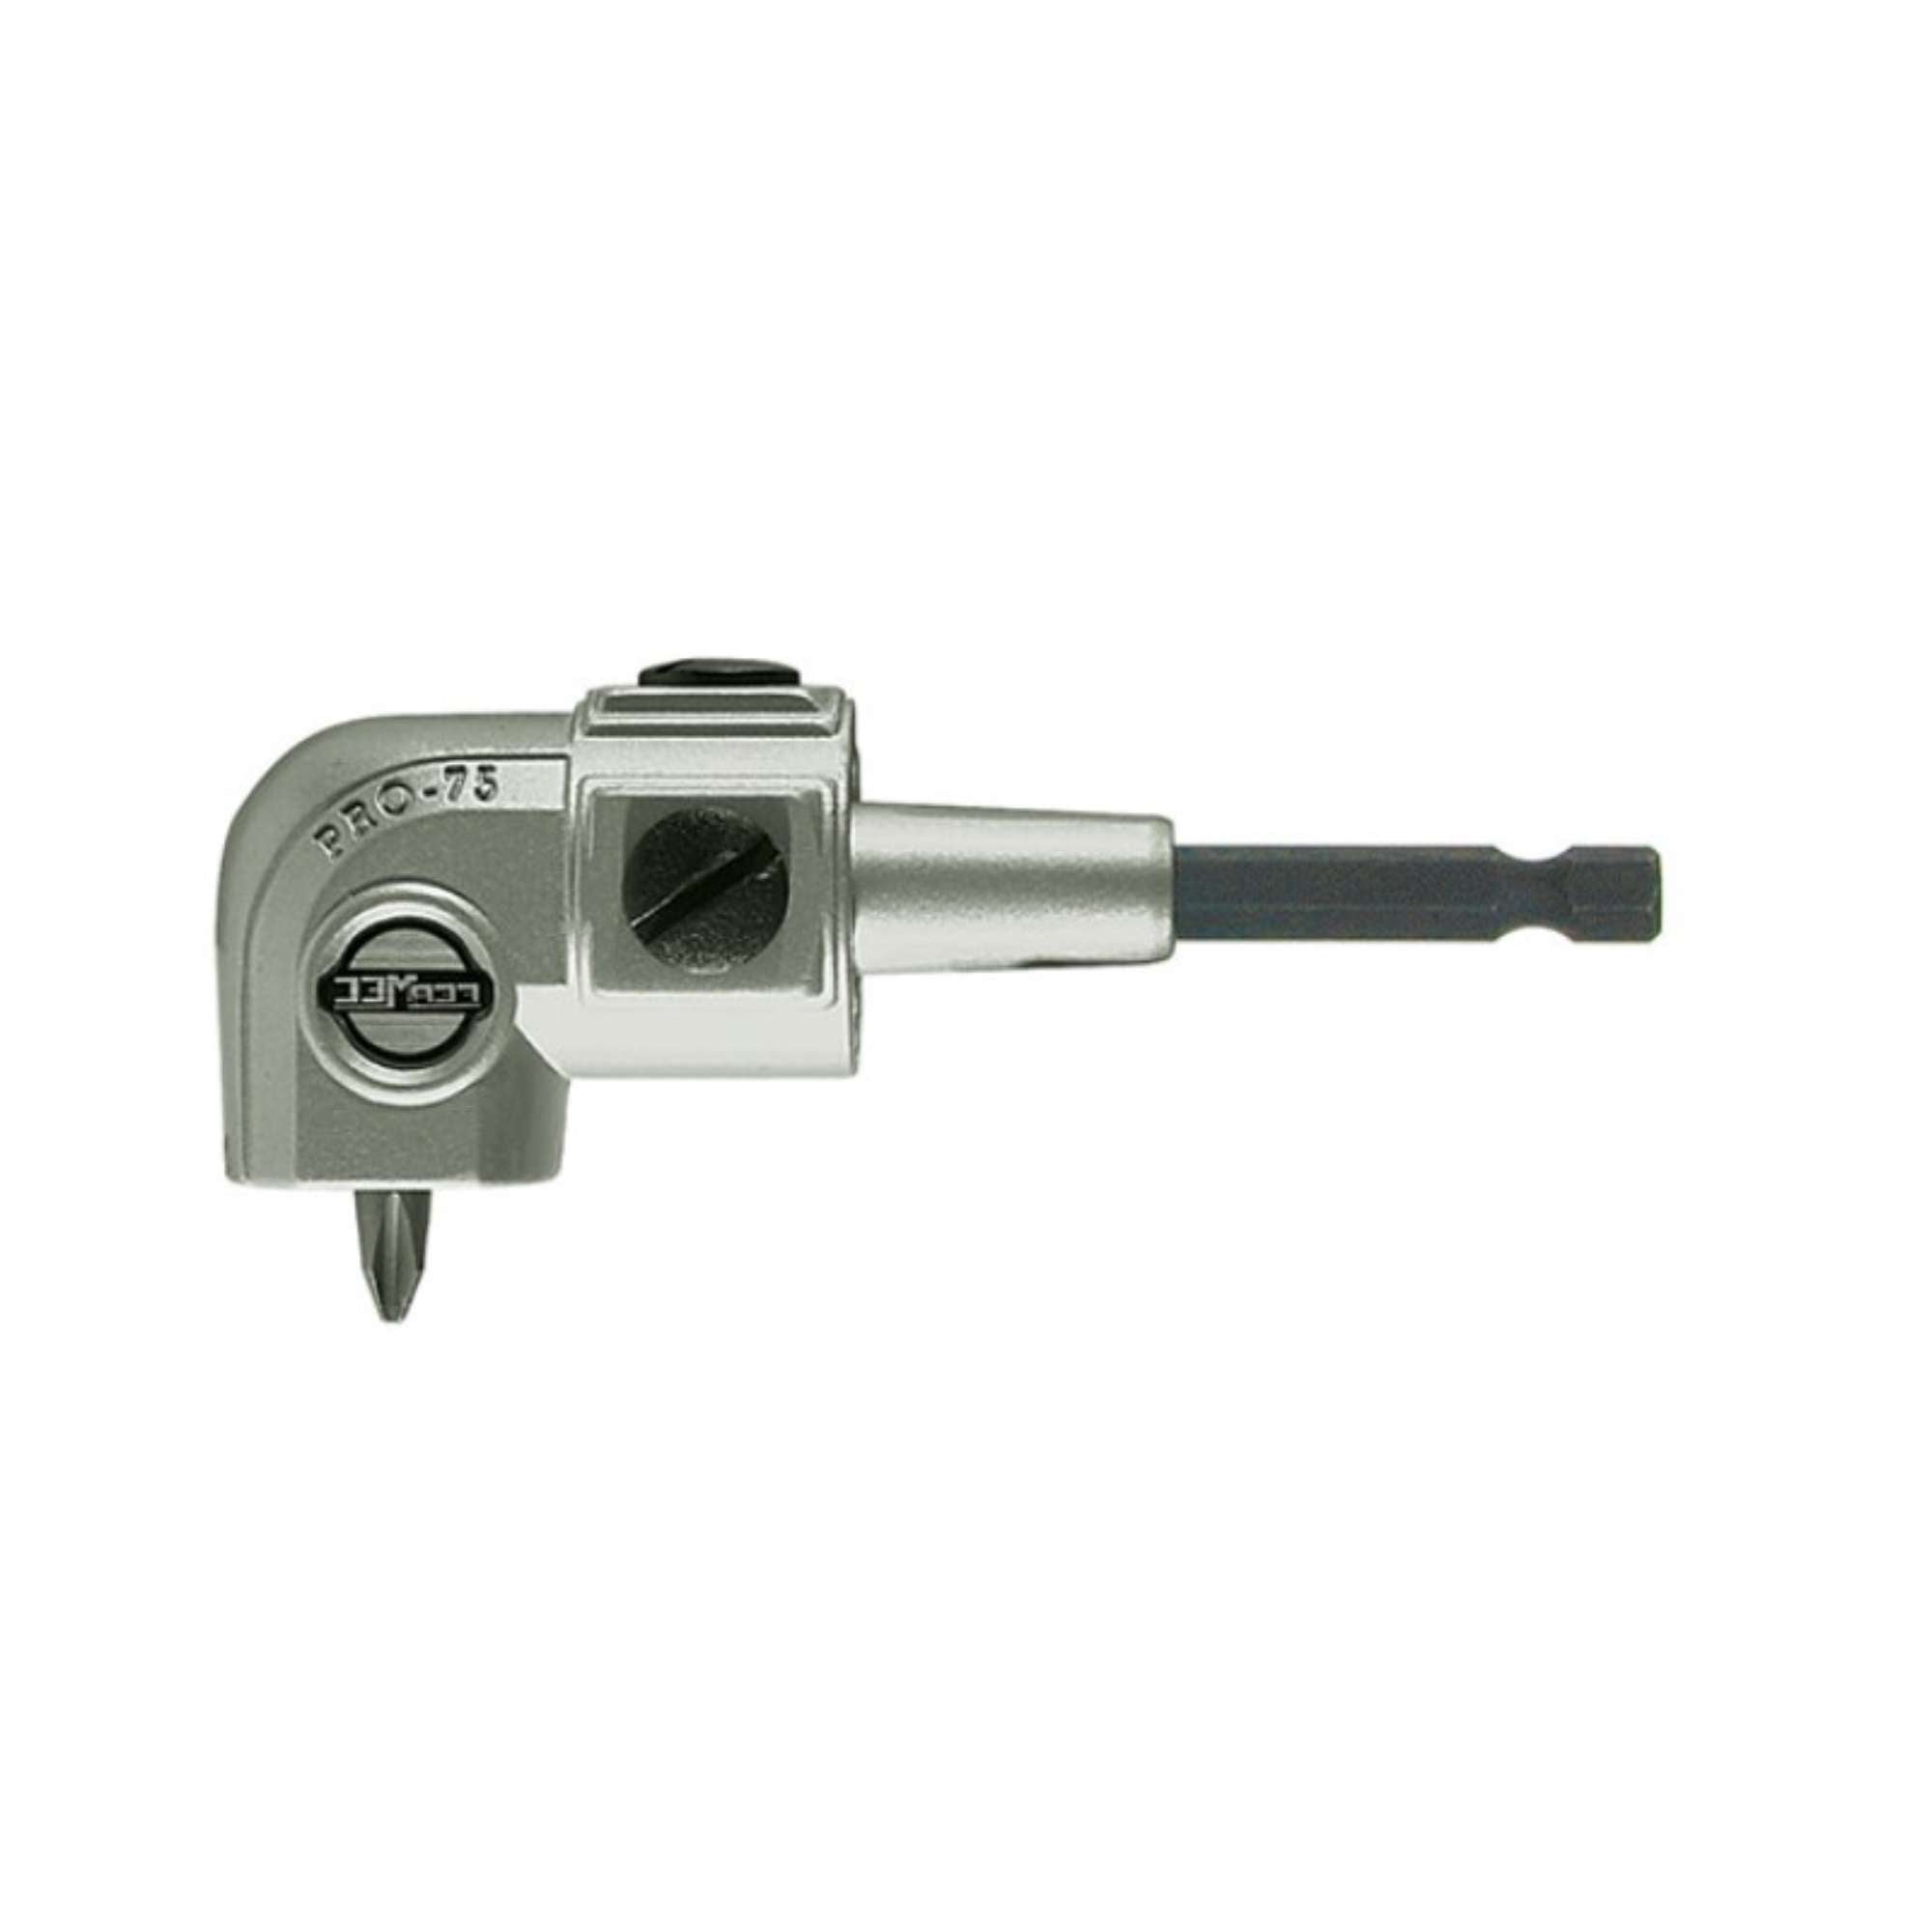 90 angle toolholders - Fermec 1/4" - Fermec 83675